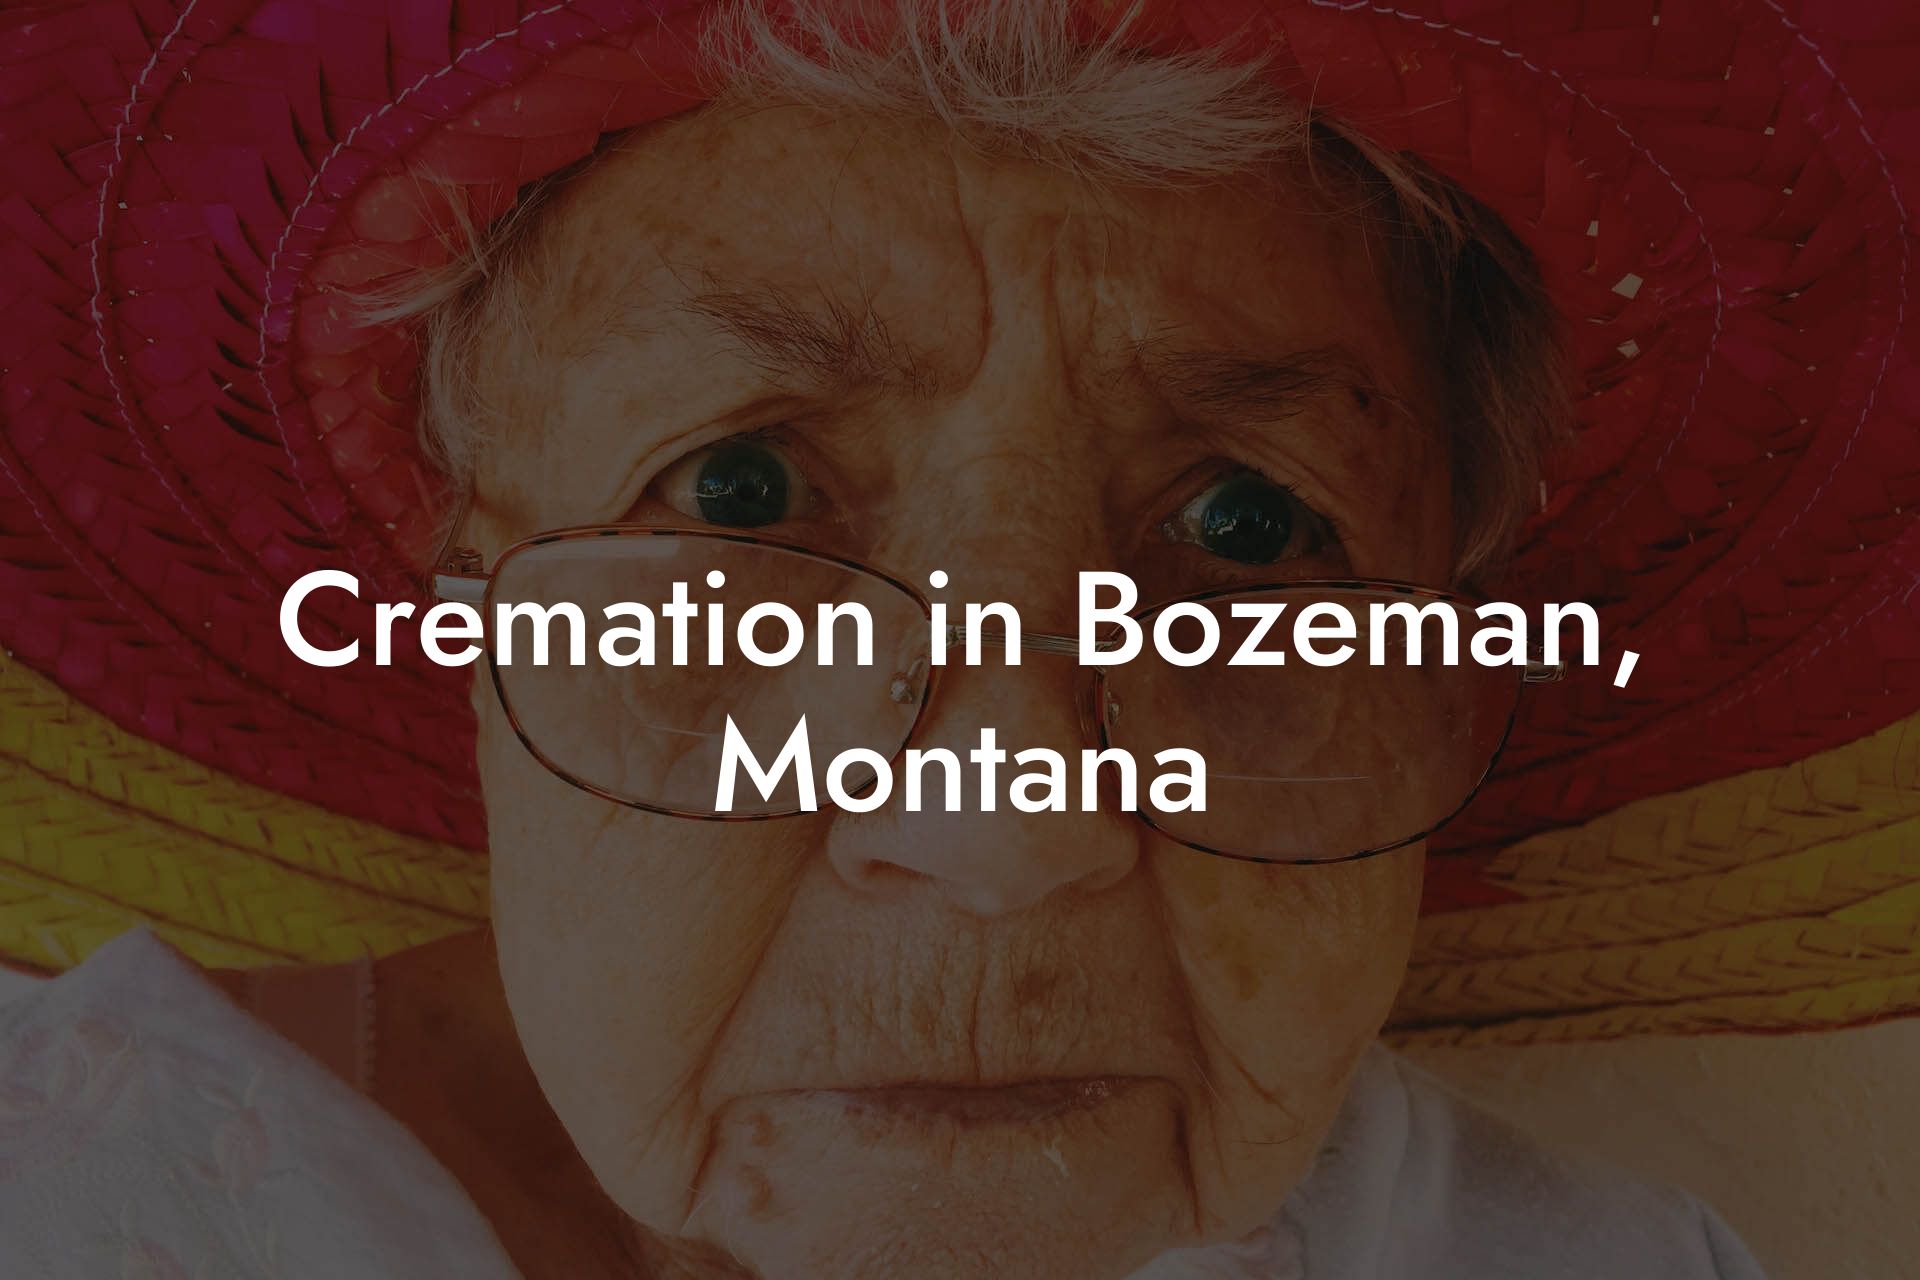 Cremation in Bozeman, Montana